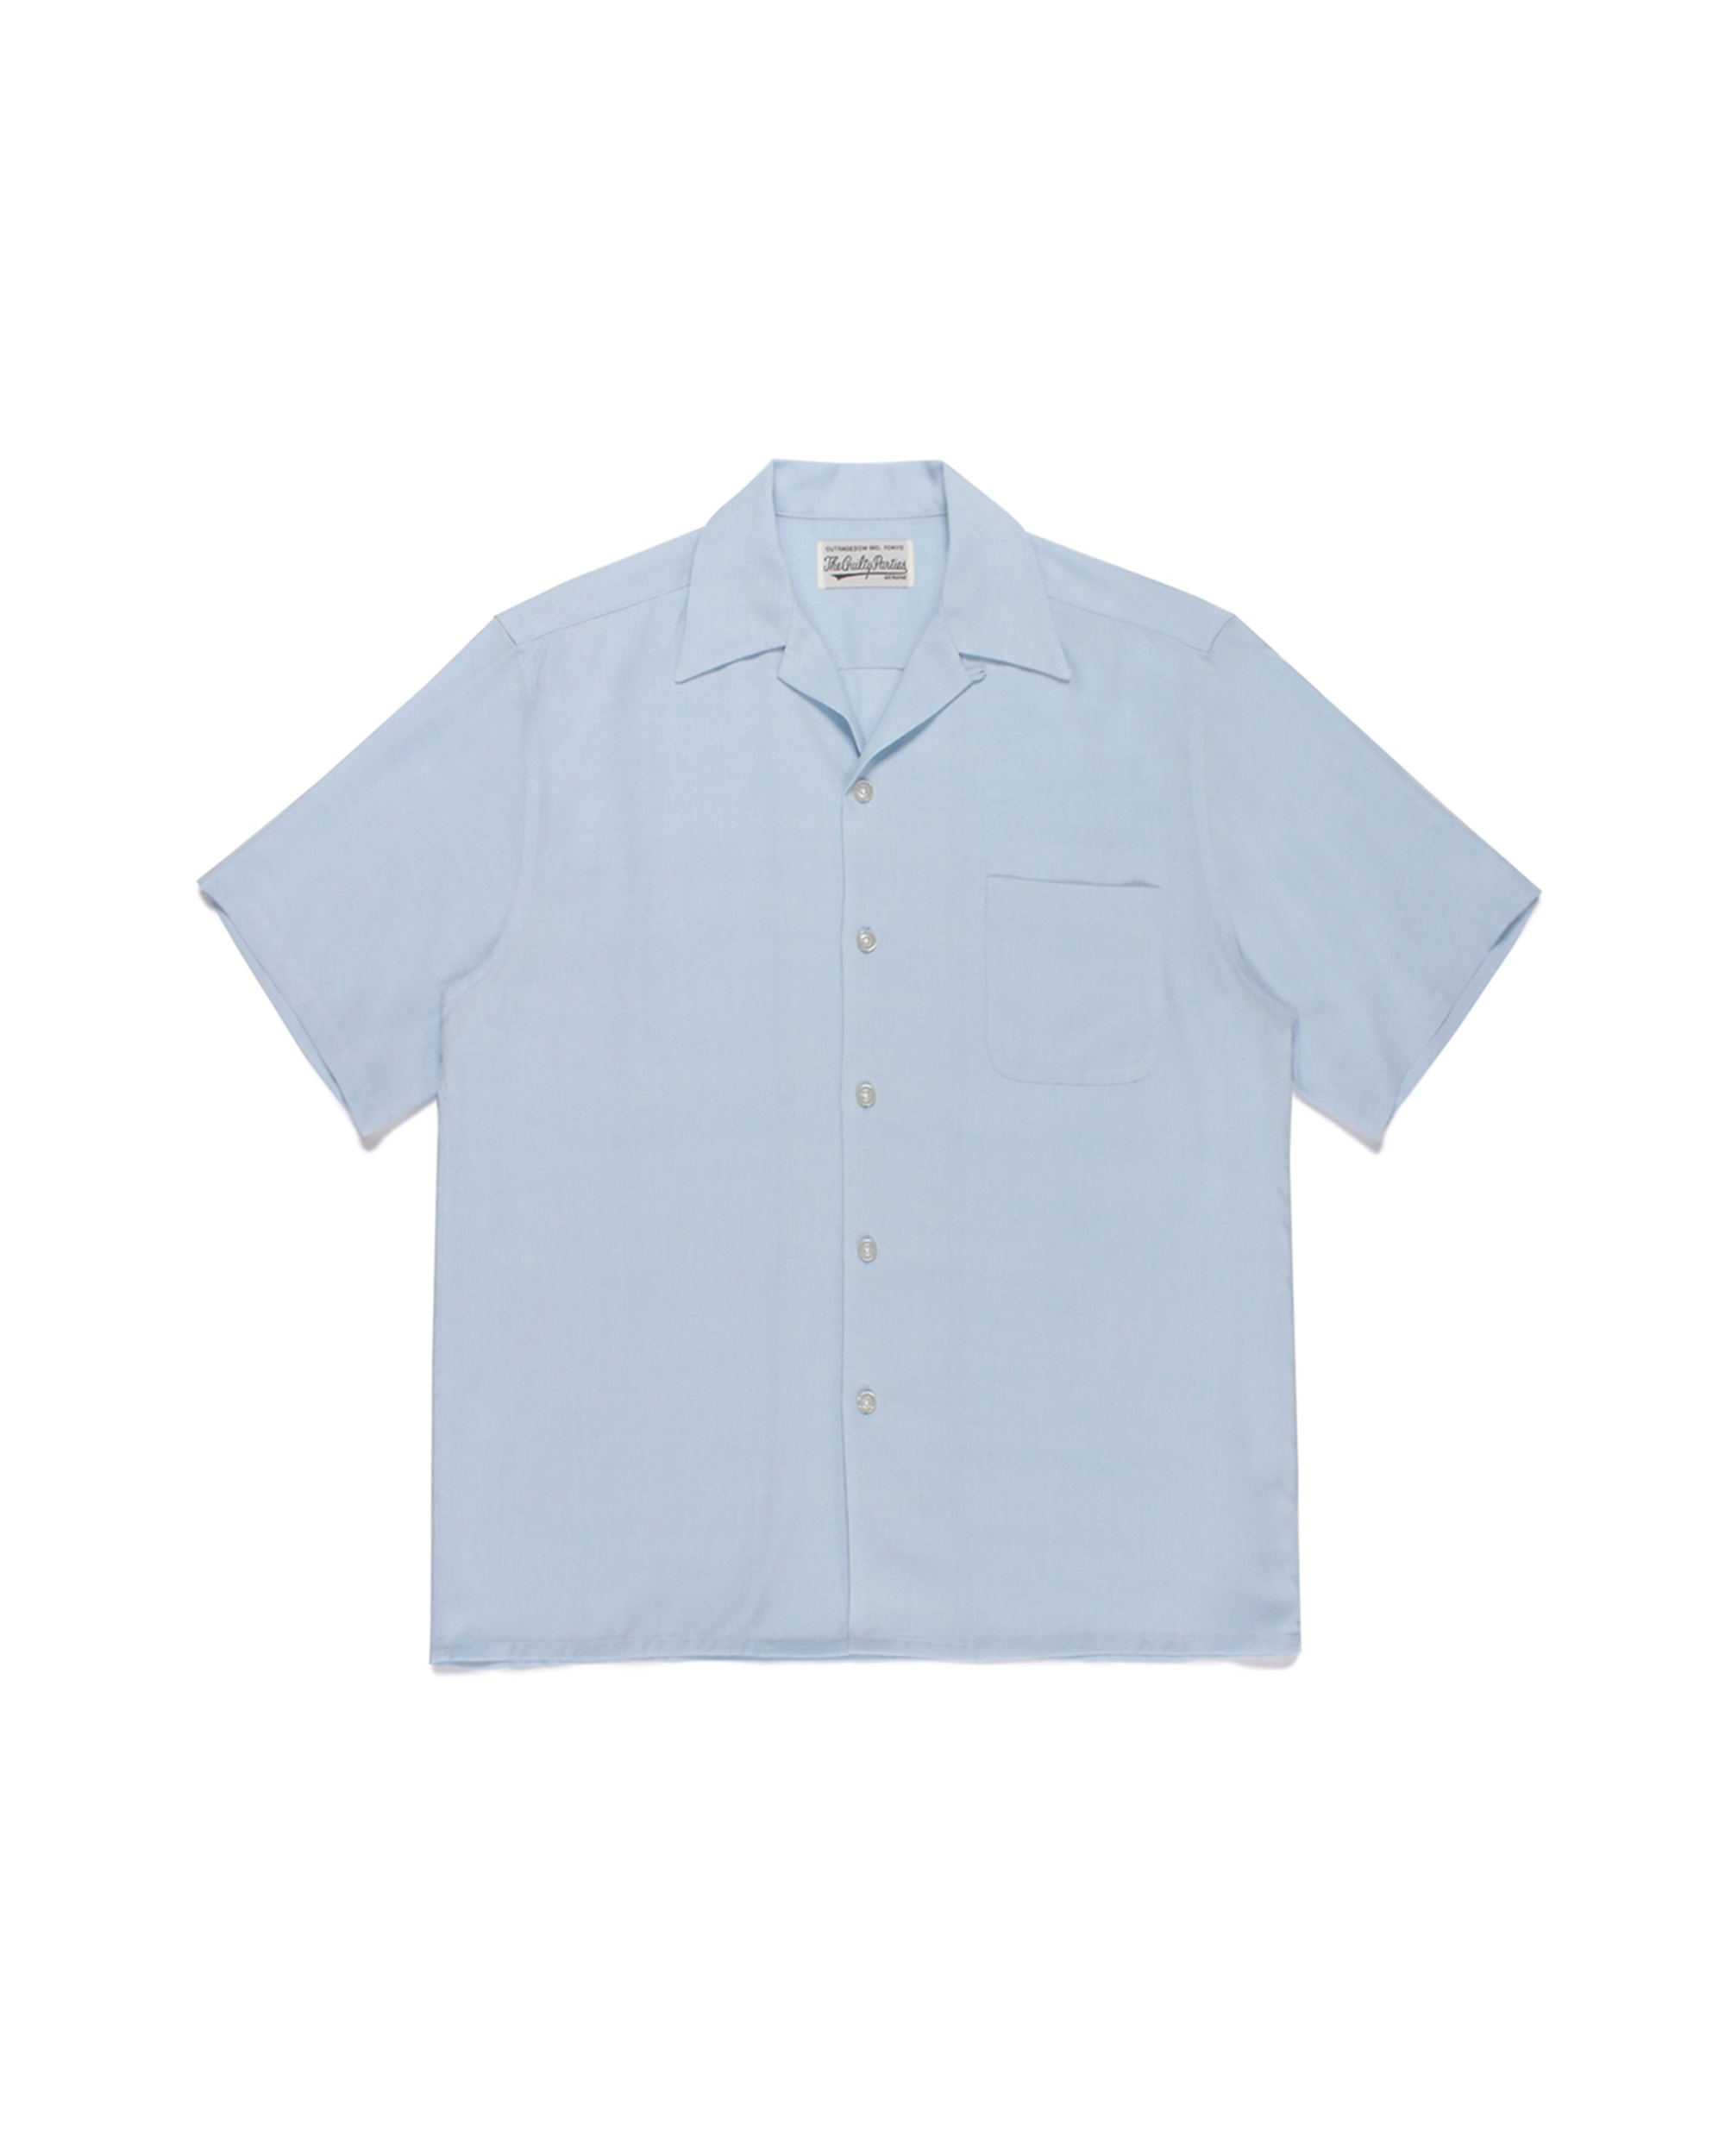 Two-Tone 50's Shirt - Light Blue